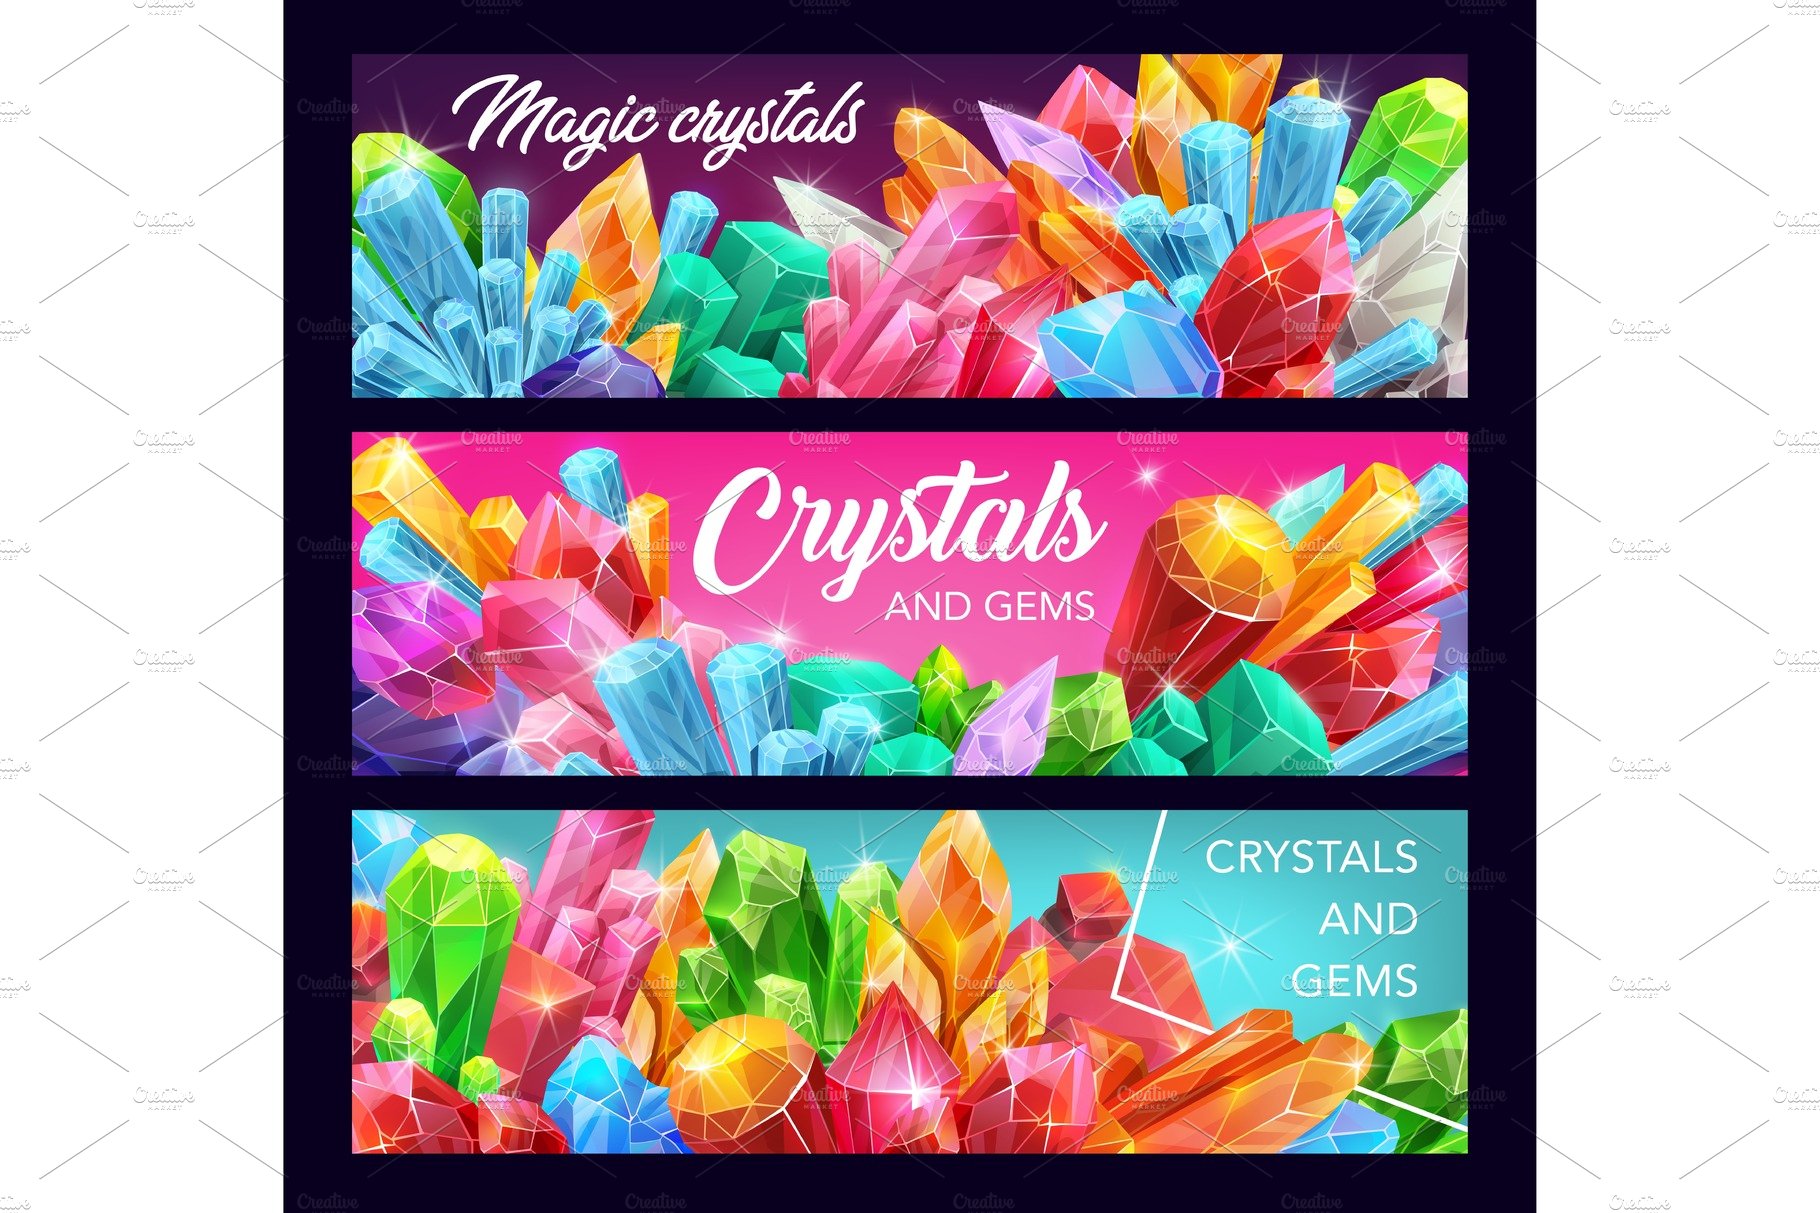 Magic crystals, presious gemstones cover image.